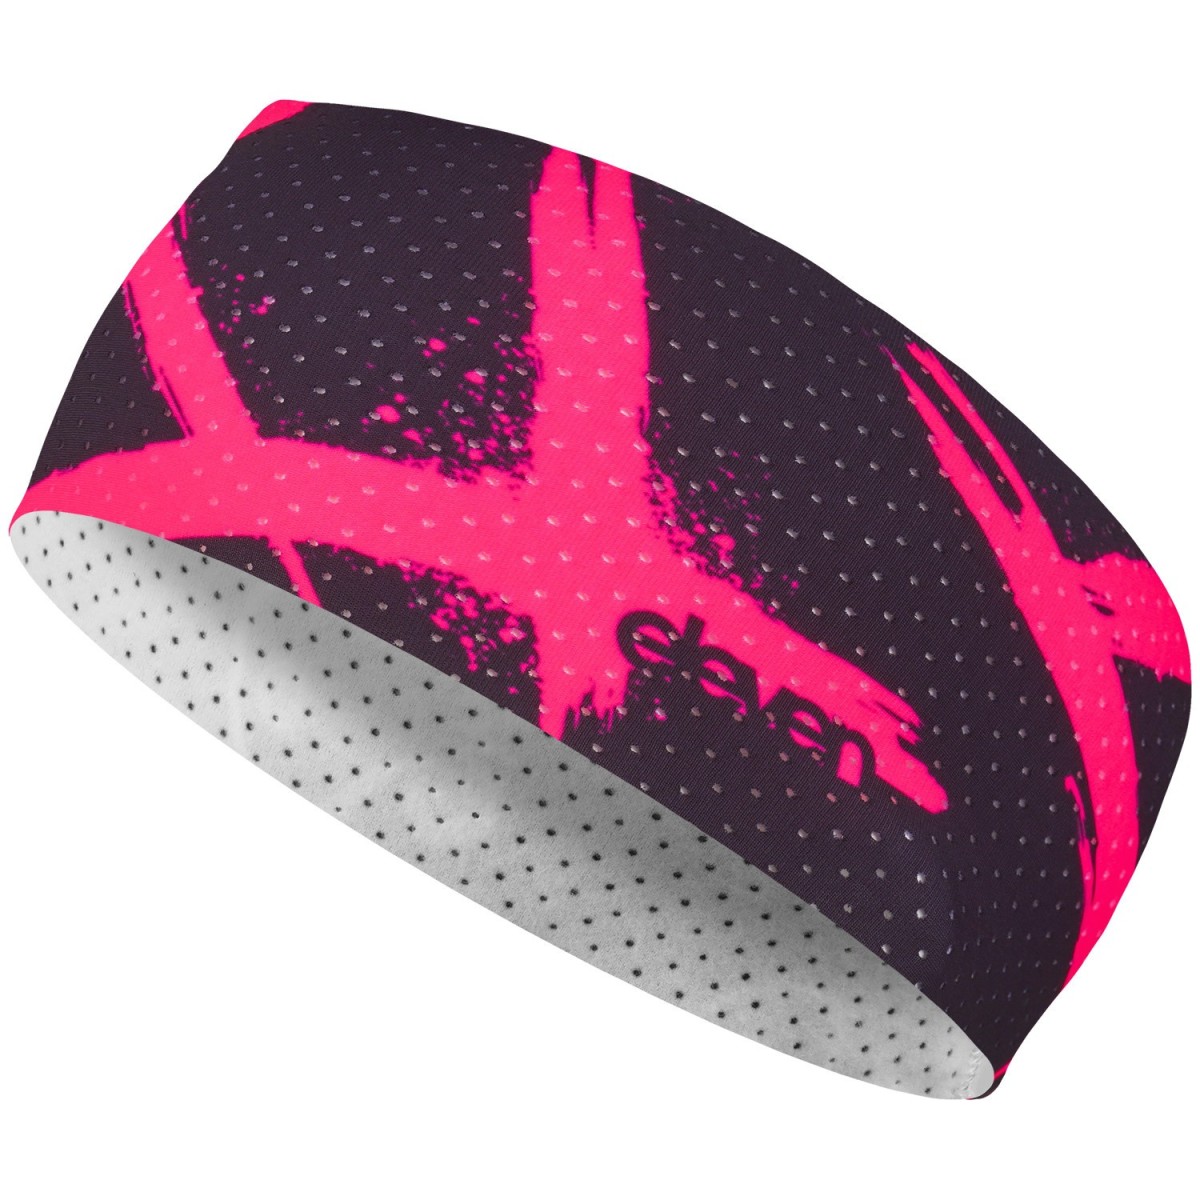 ELEVEN headband HB Air XI pink